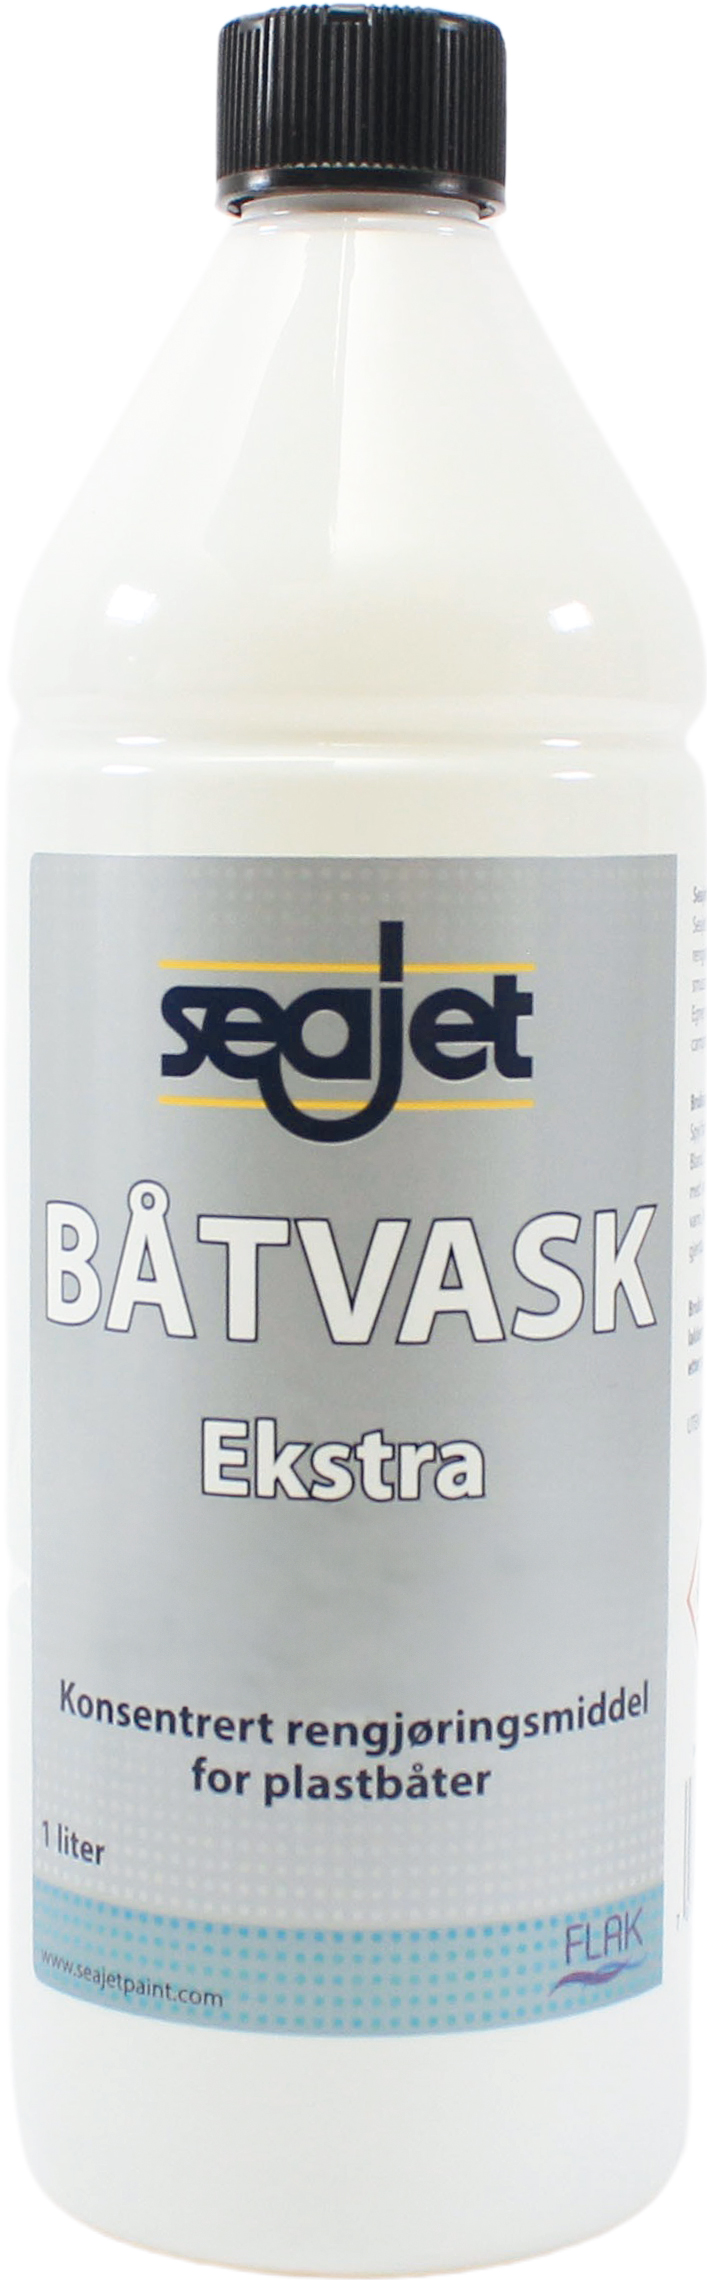 Seajet Båtvask Ekstra